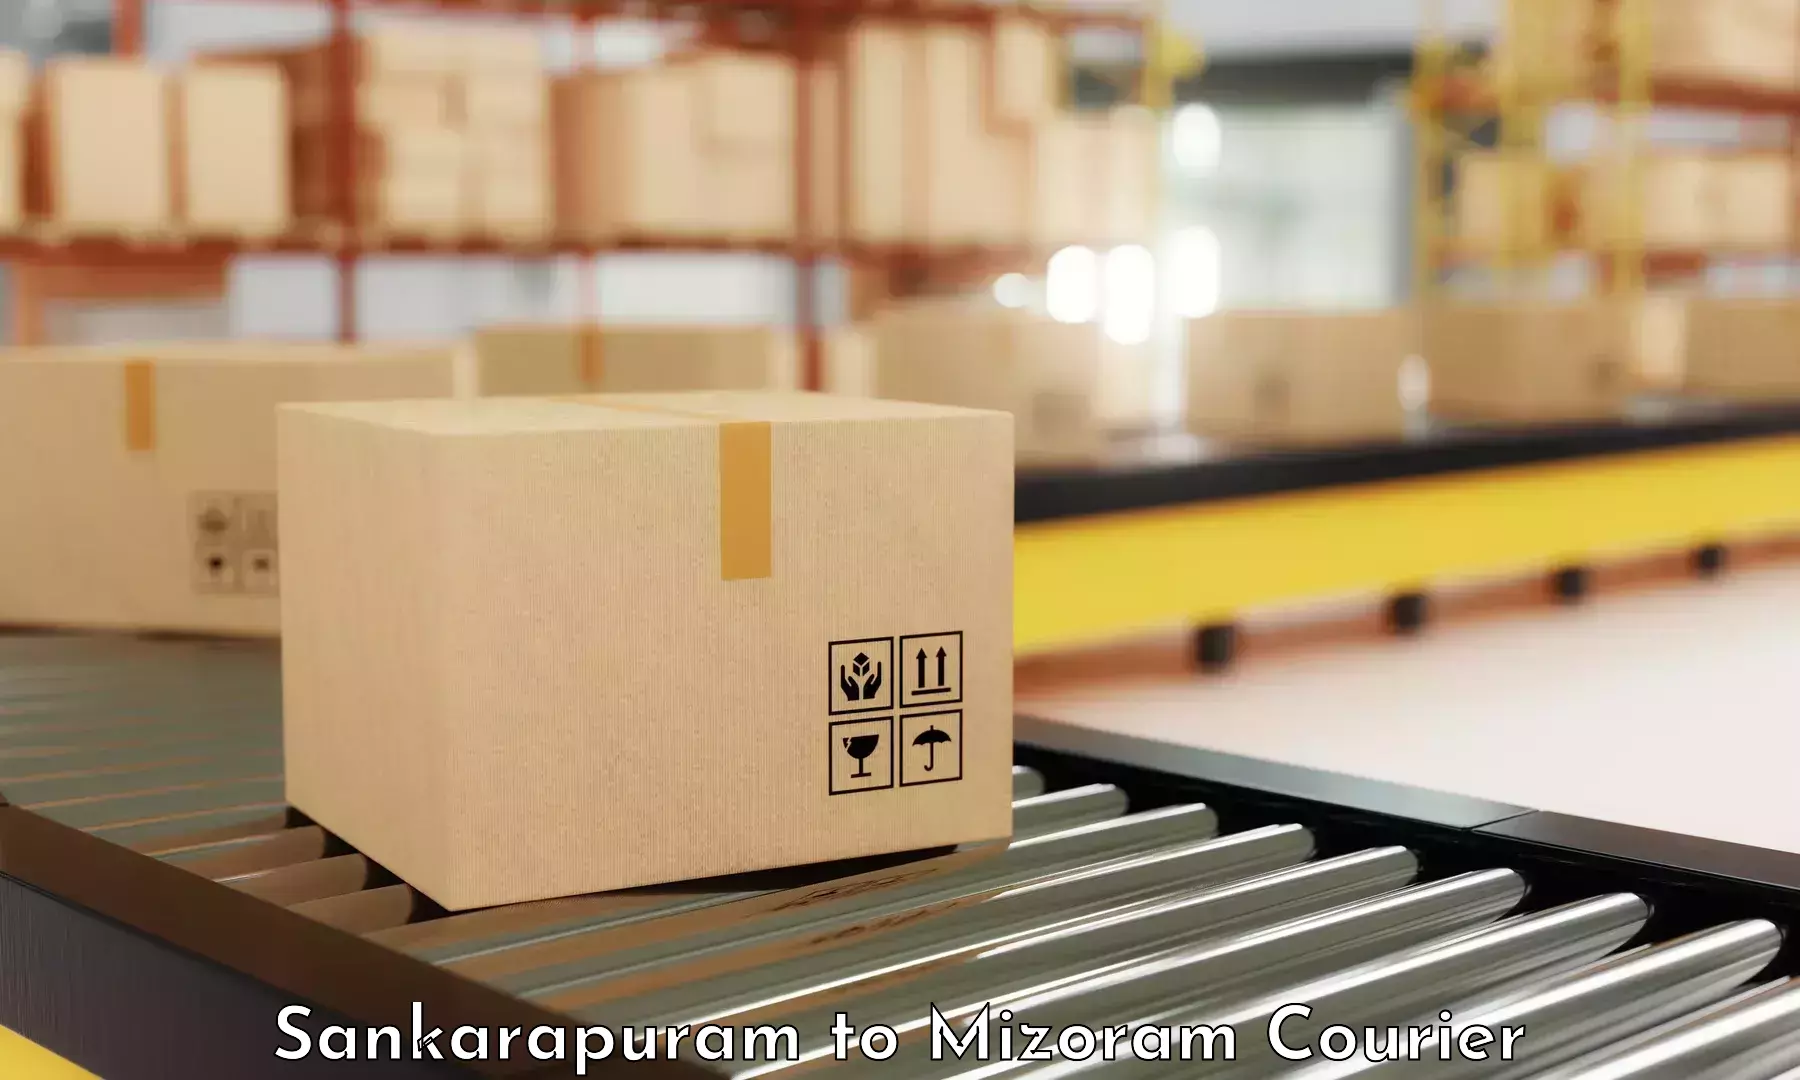 State-of-the-art courier technology Sankarapuram to Siaha